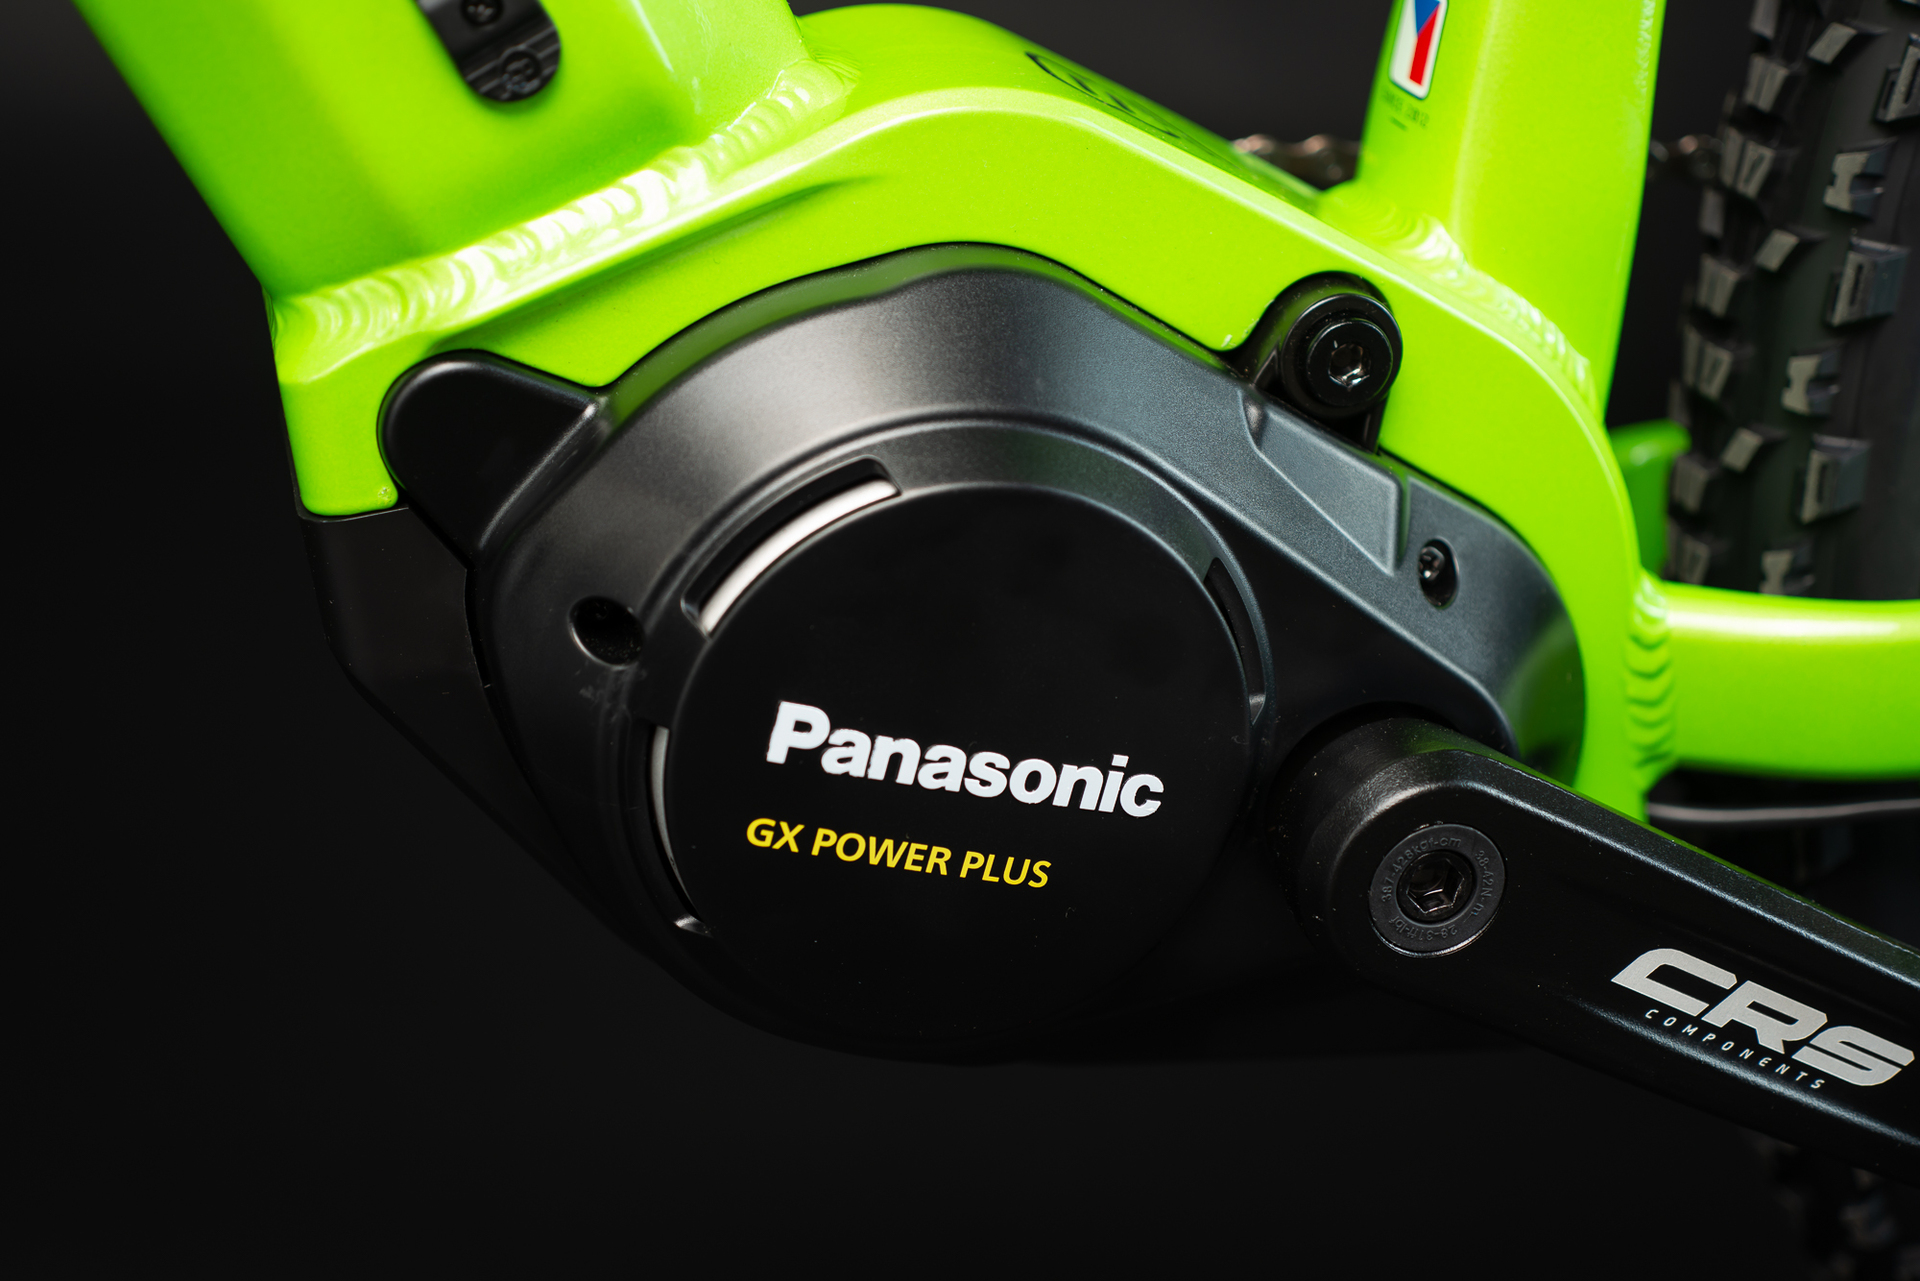 Elektrofahrrder mit Panasonic-Motor